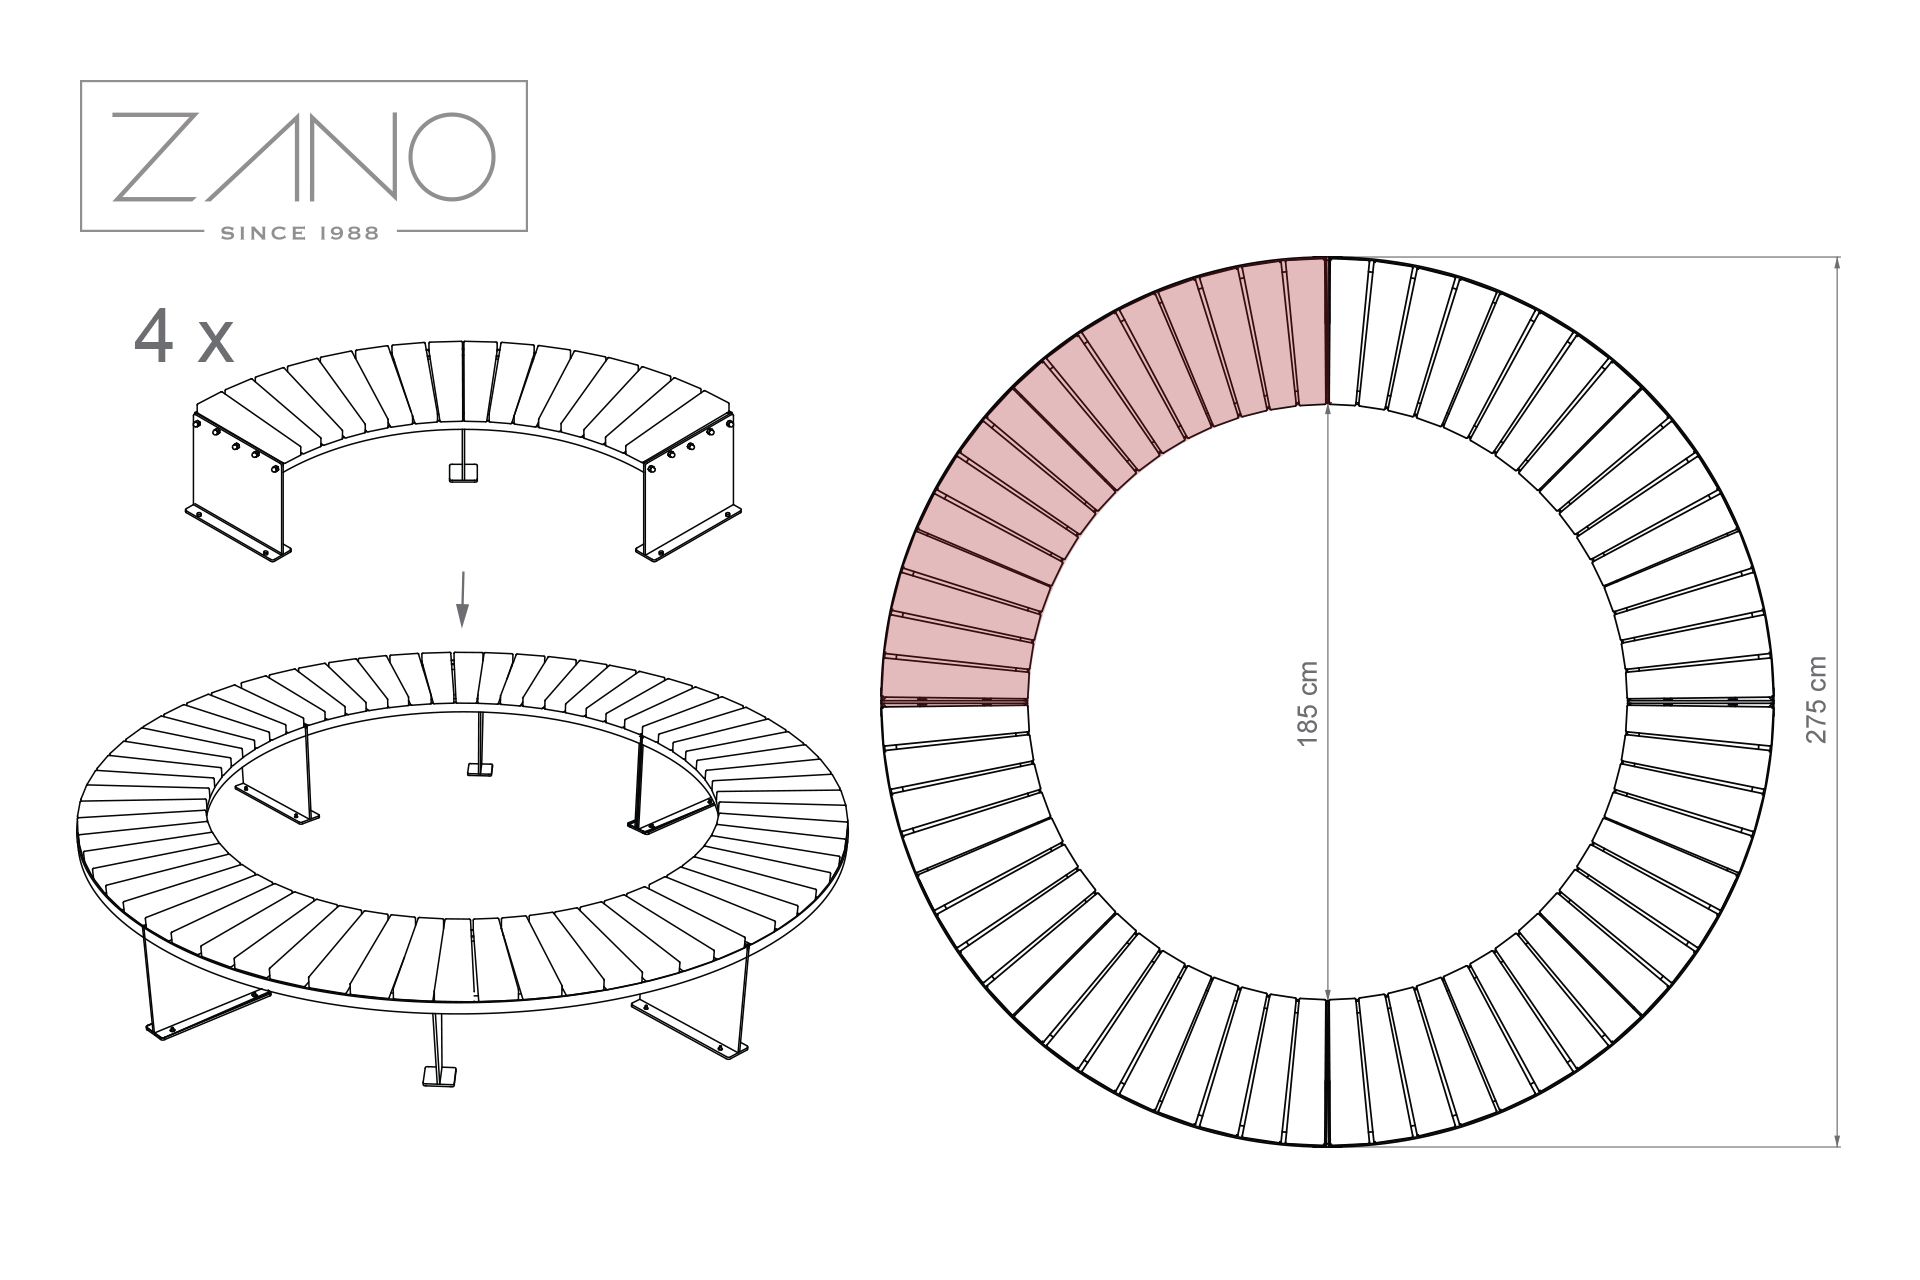 Domino bench 90 02.440.1 | dimensions of four segments